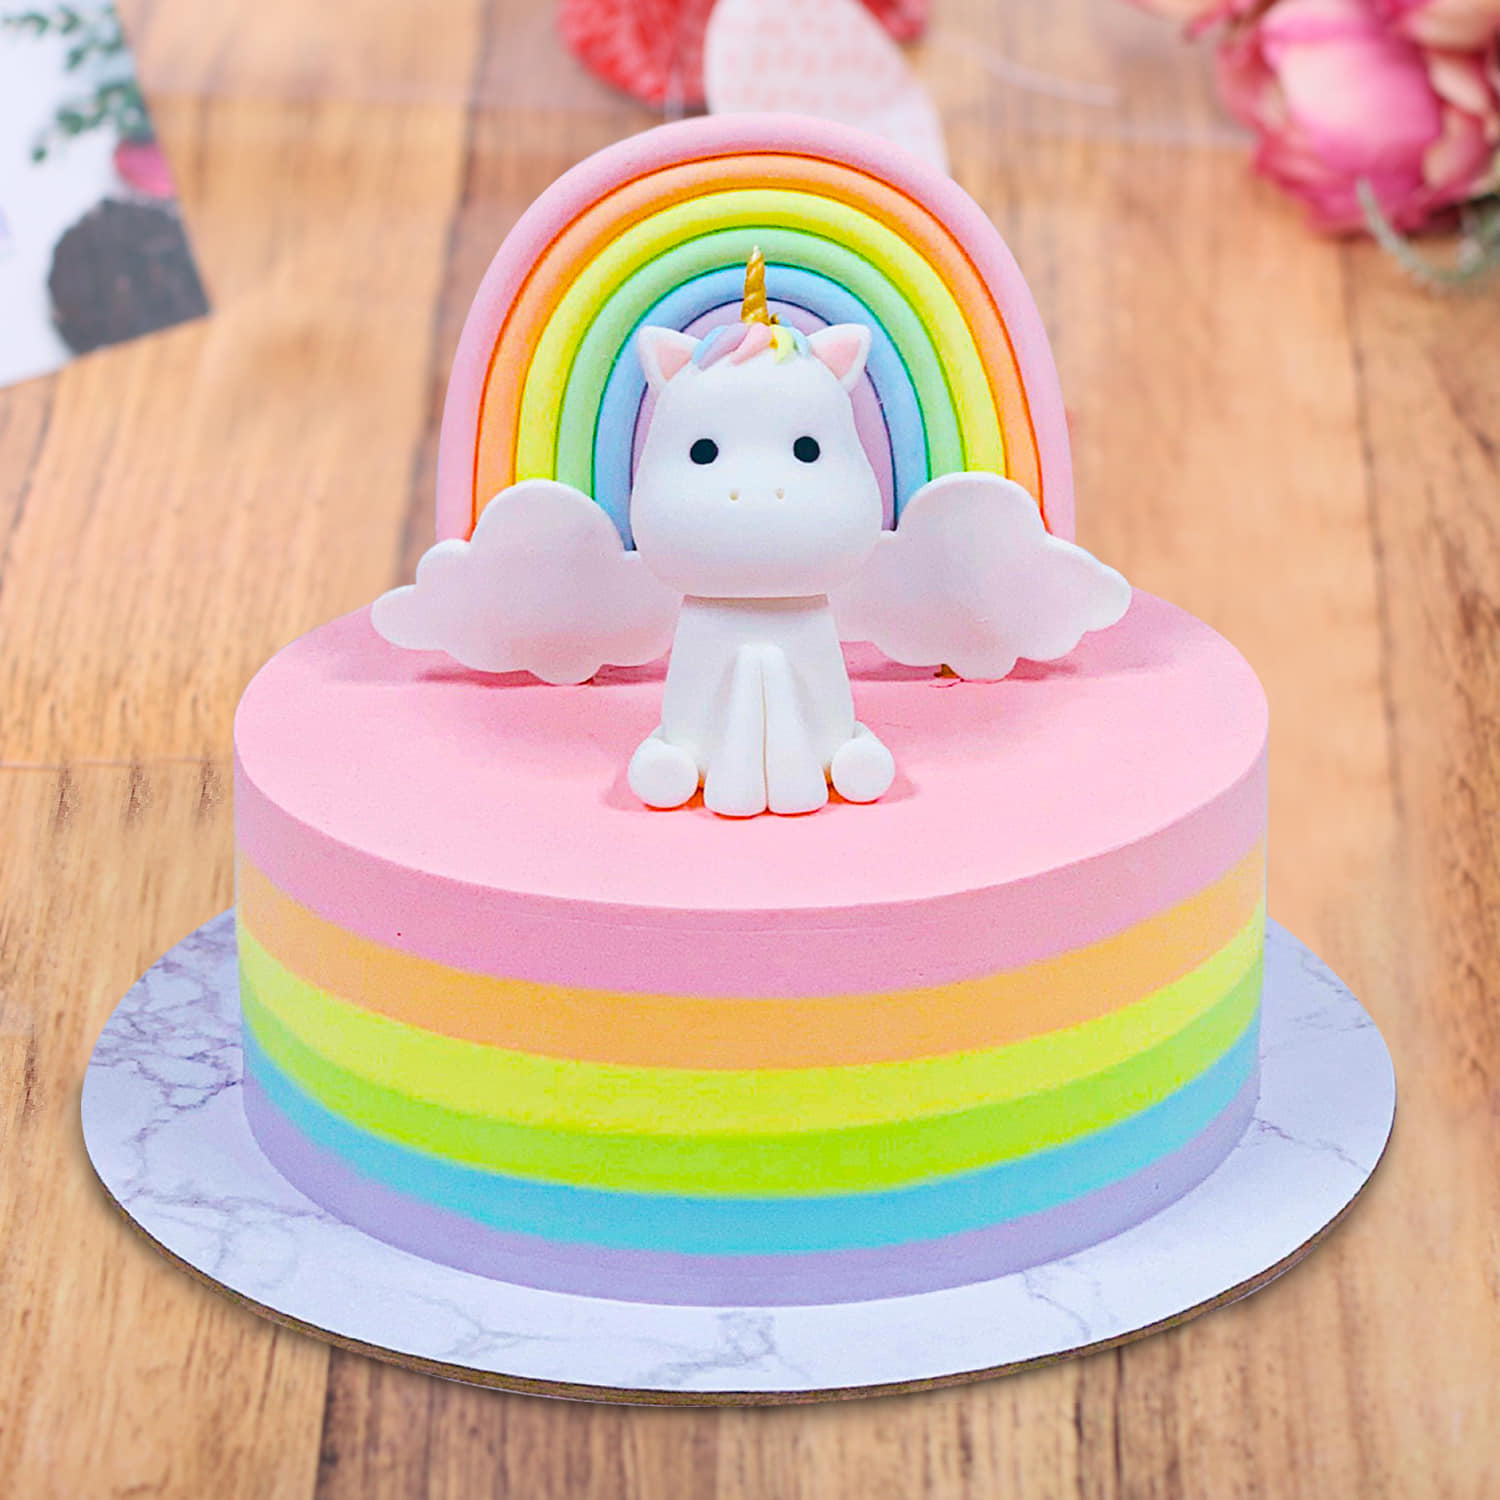 21 Best Rainbow Cake Recipes & Ideas - How to Make a Rainbow Cake - Parade:  Entertainment, Recipes, Health, Life, Holidays